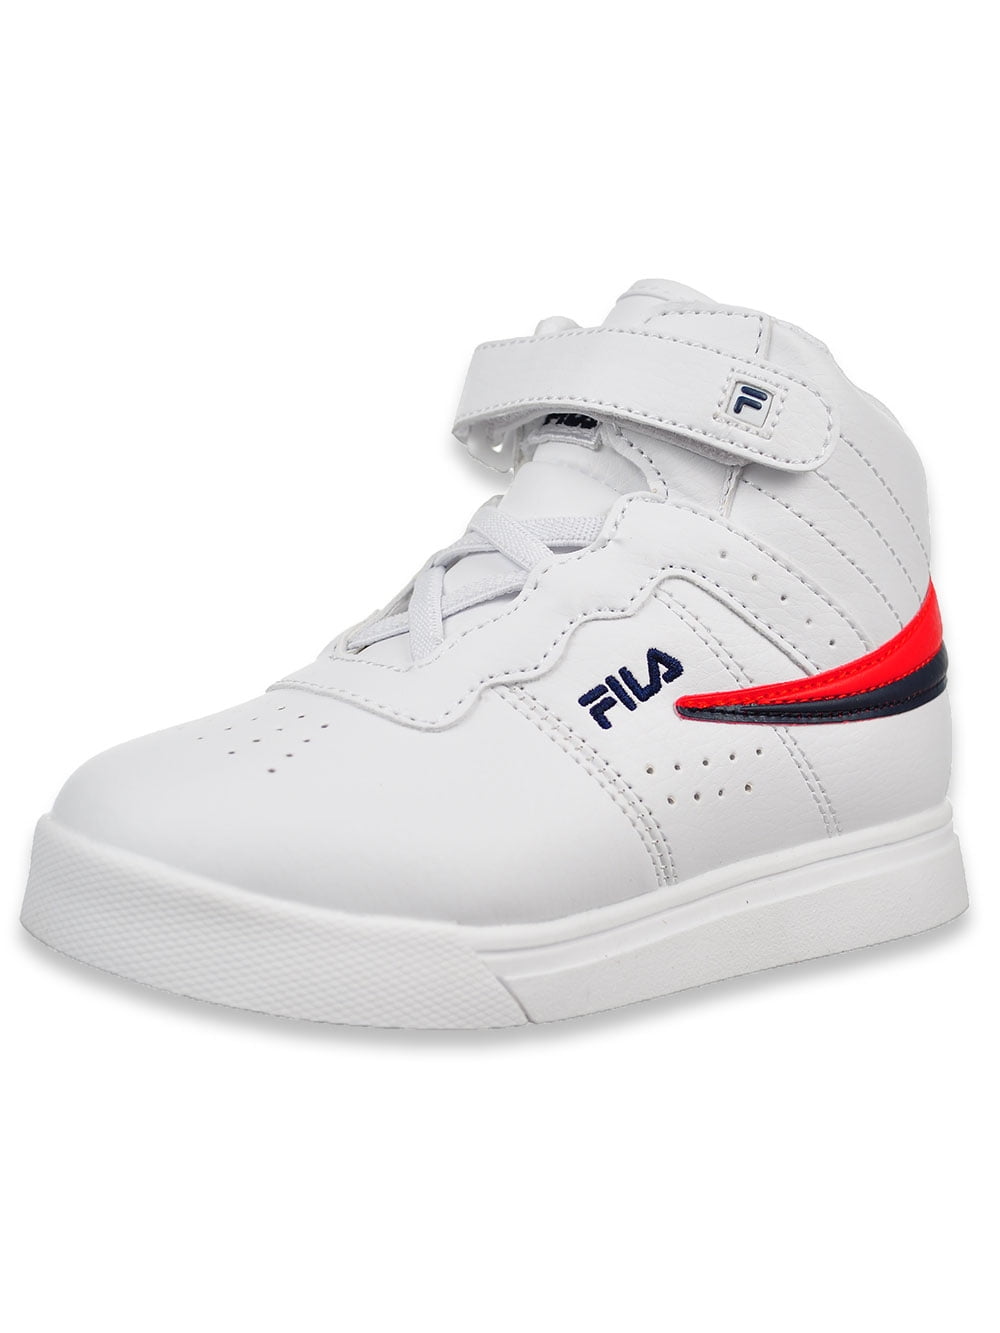 Fila Boys\' Vulc 13 Mid Plus Hi-Top Sneakers (Sizes 6 - 10) -  white/navy/red, 10 toddler